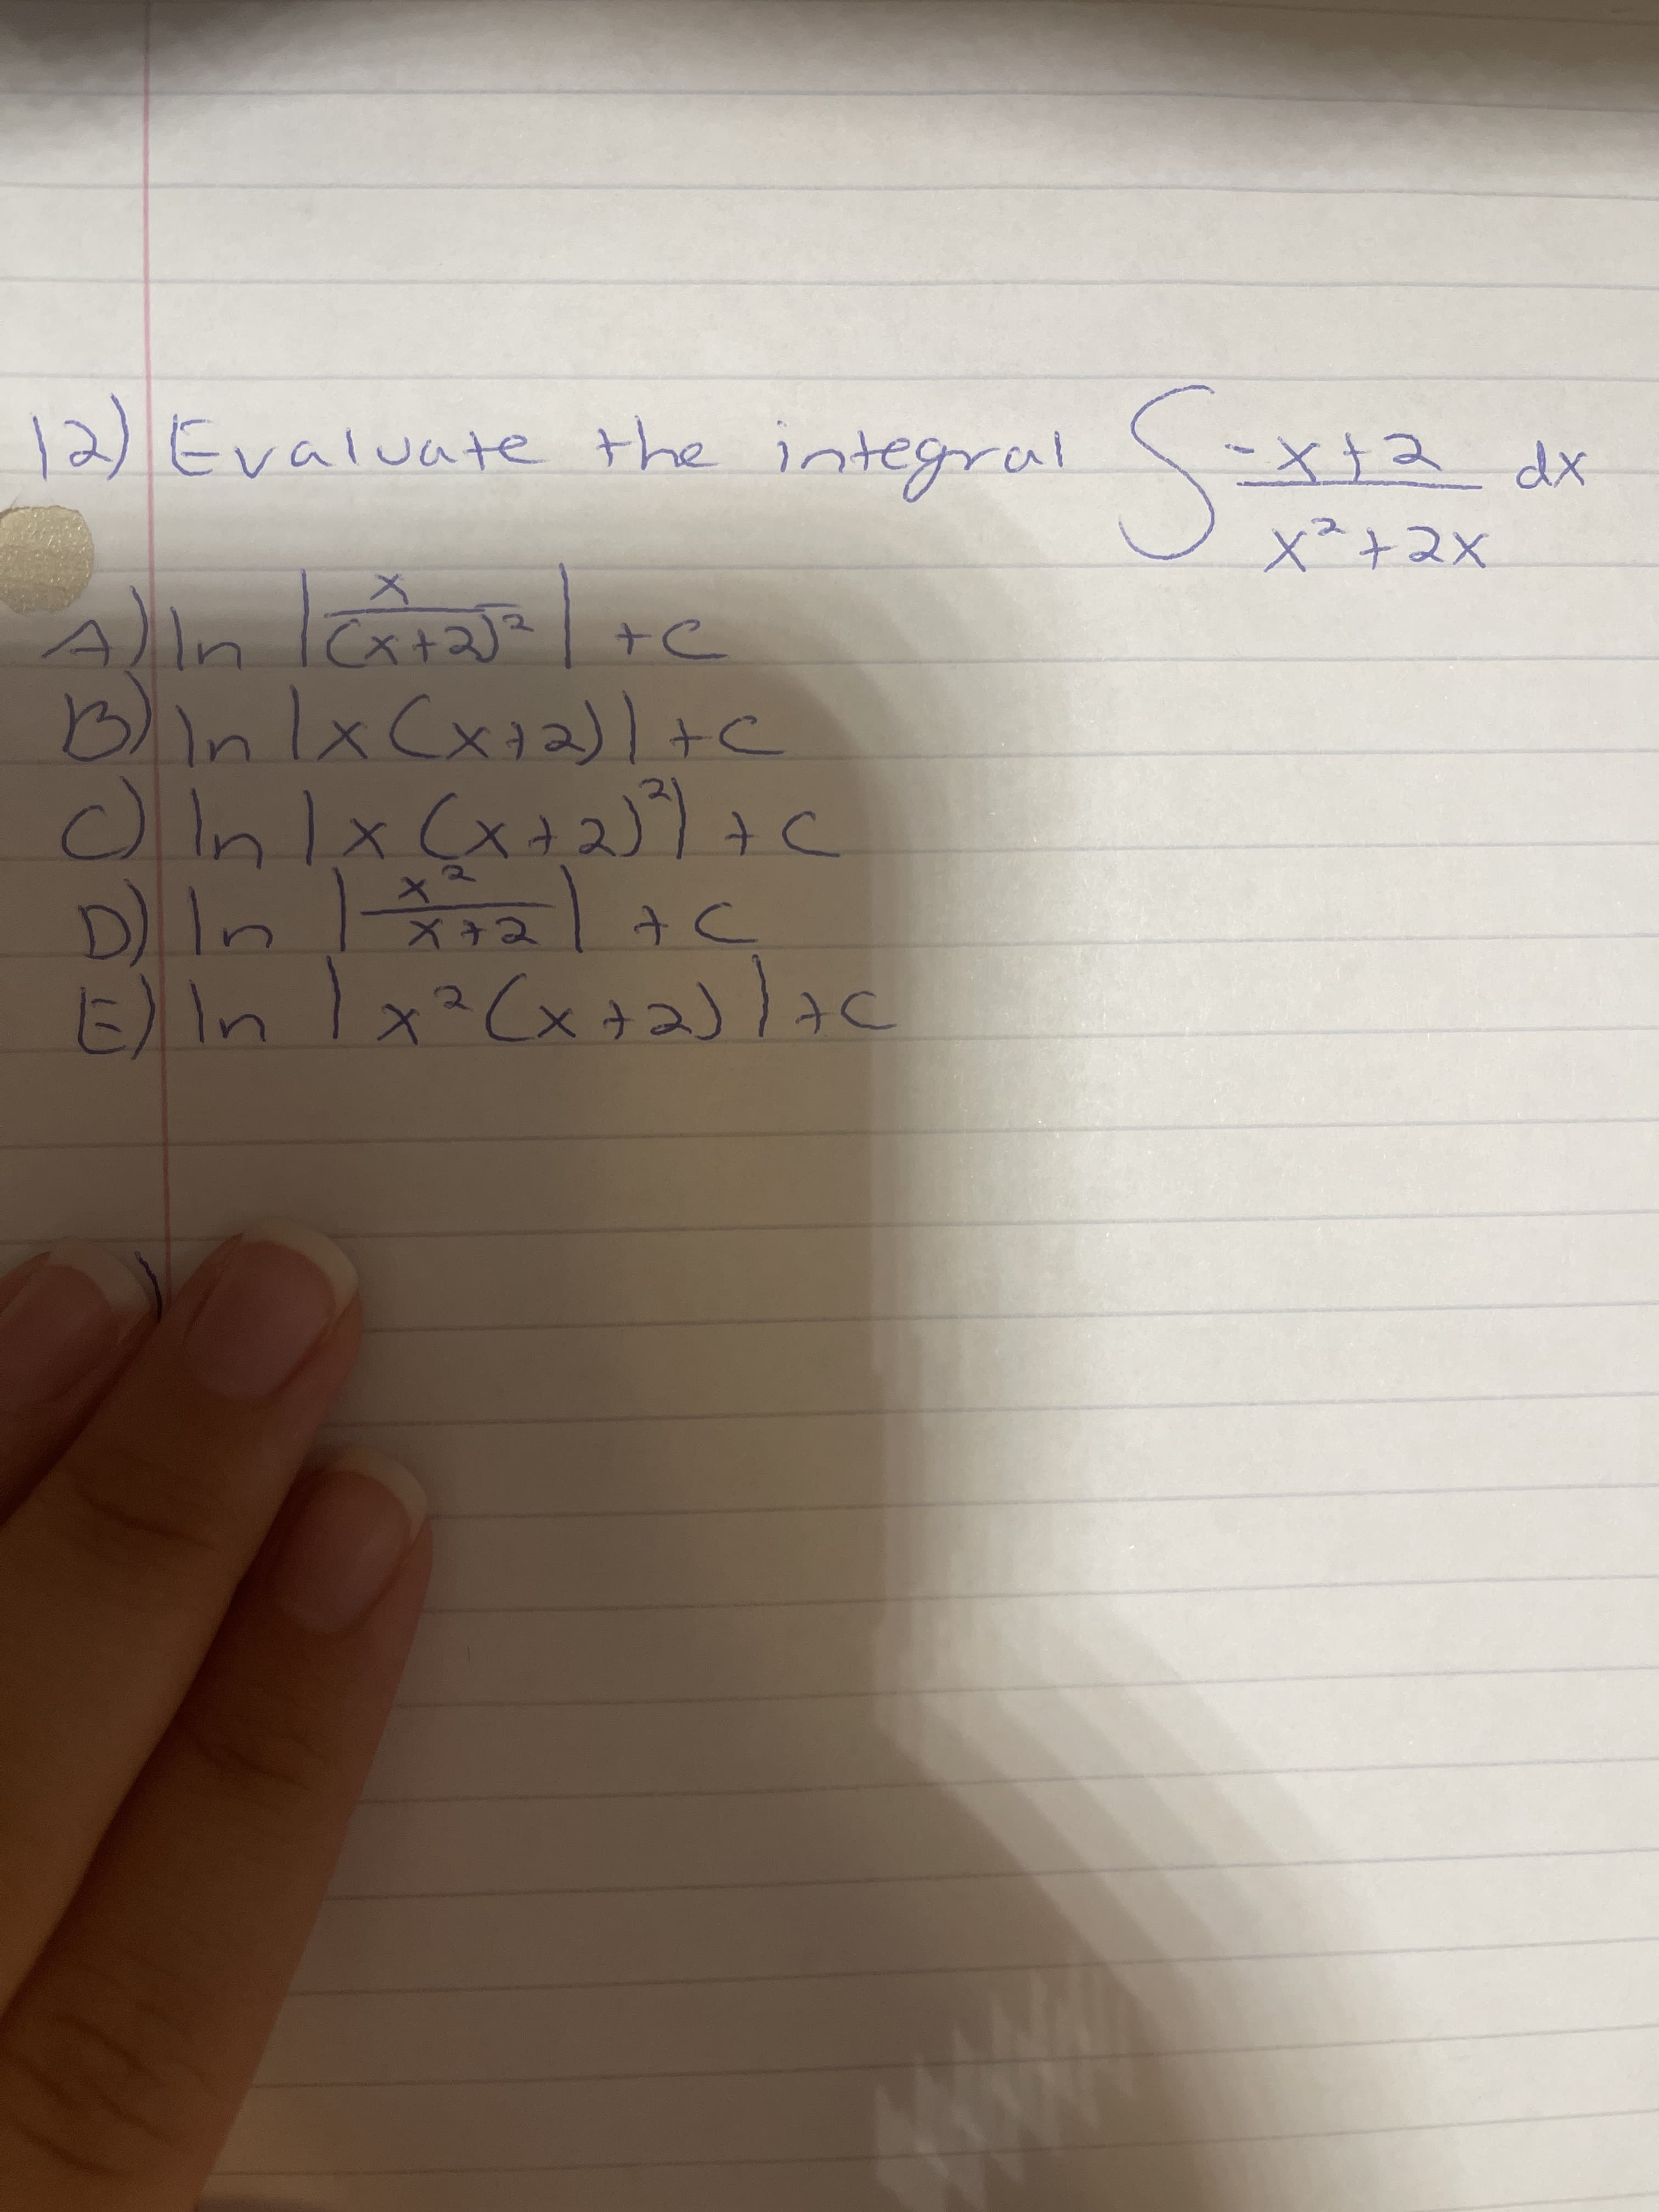 つe1ret×フとx1u1日
X72
Xとt、X
valuate he integral
2)
